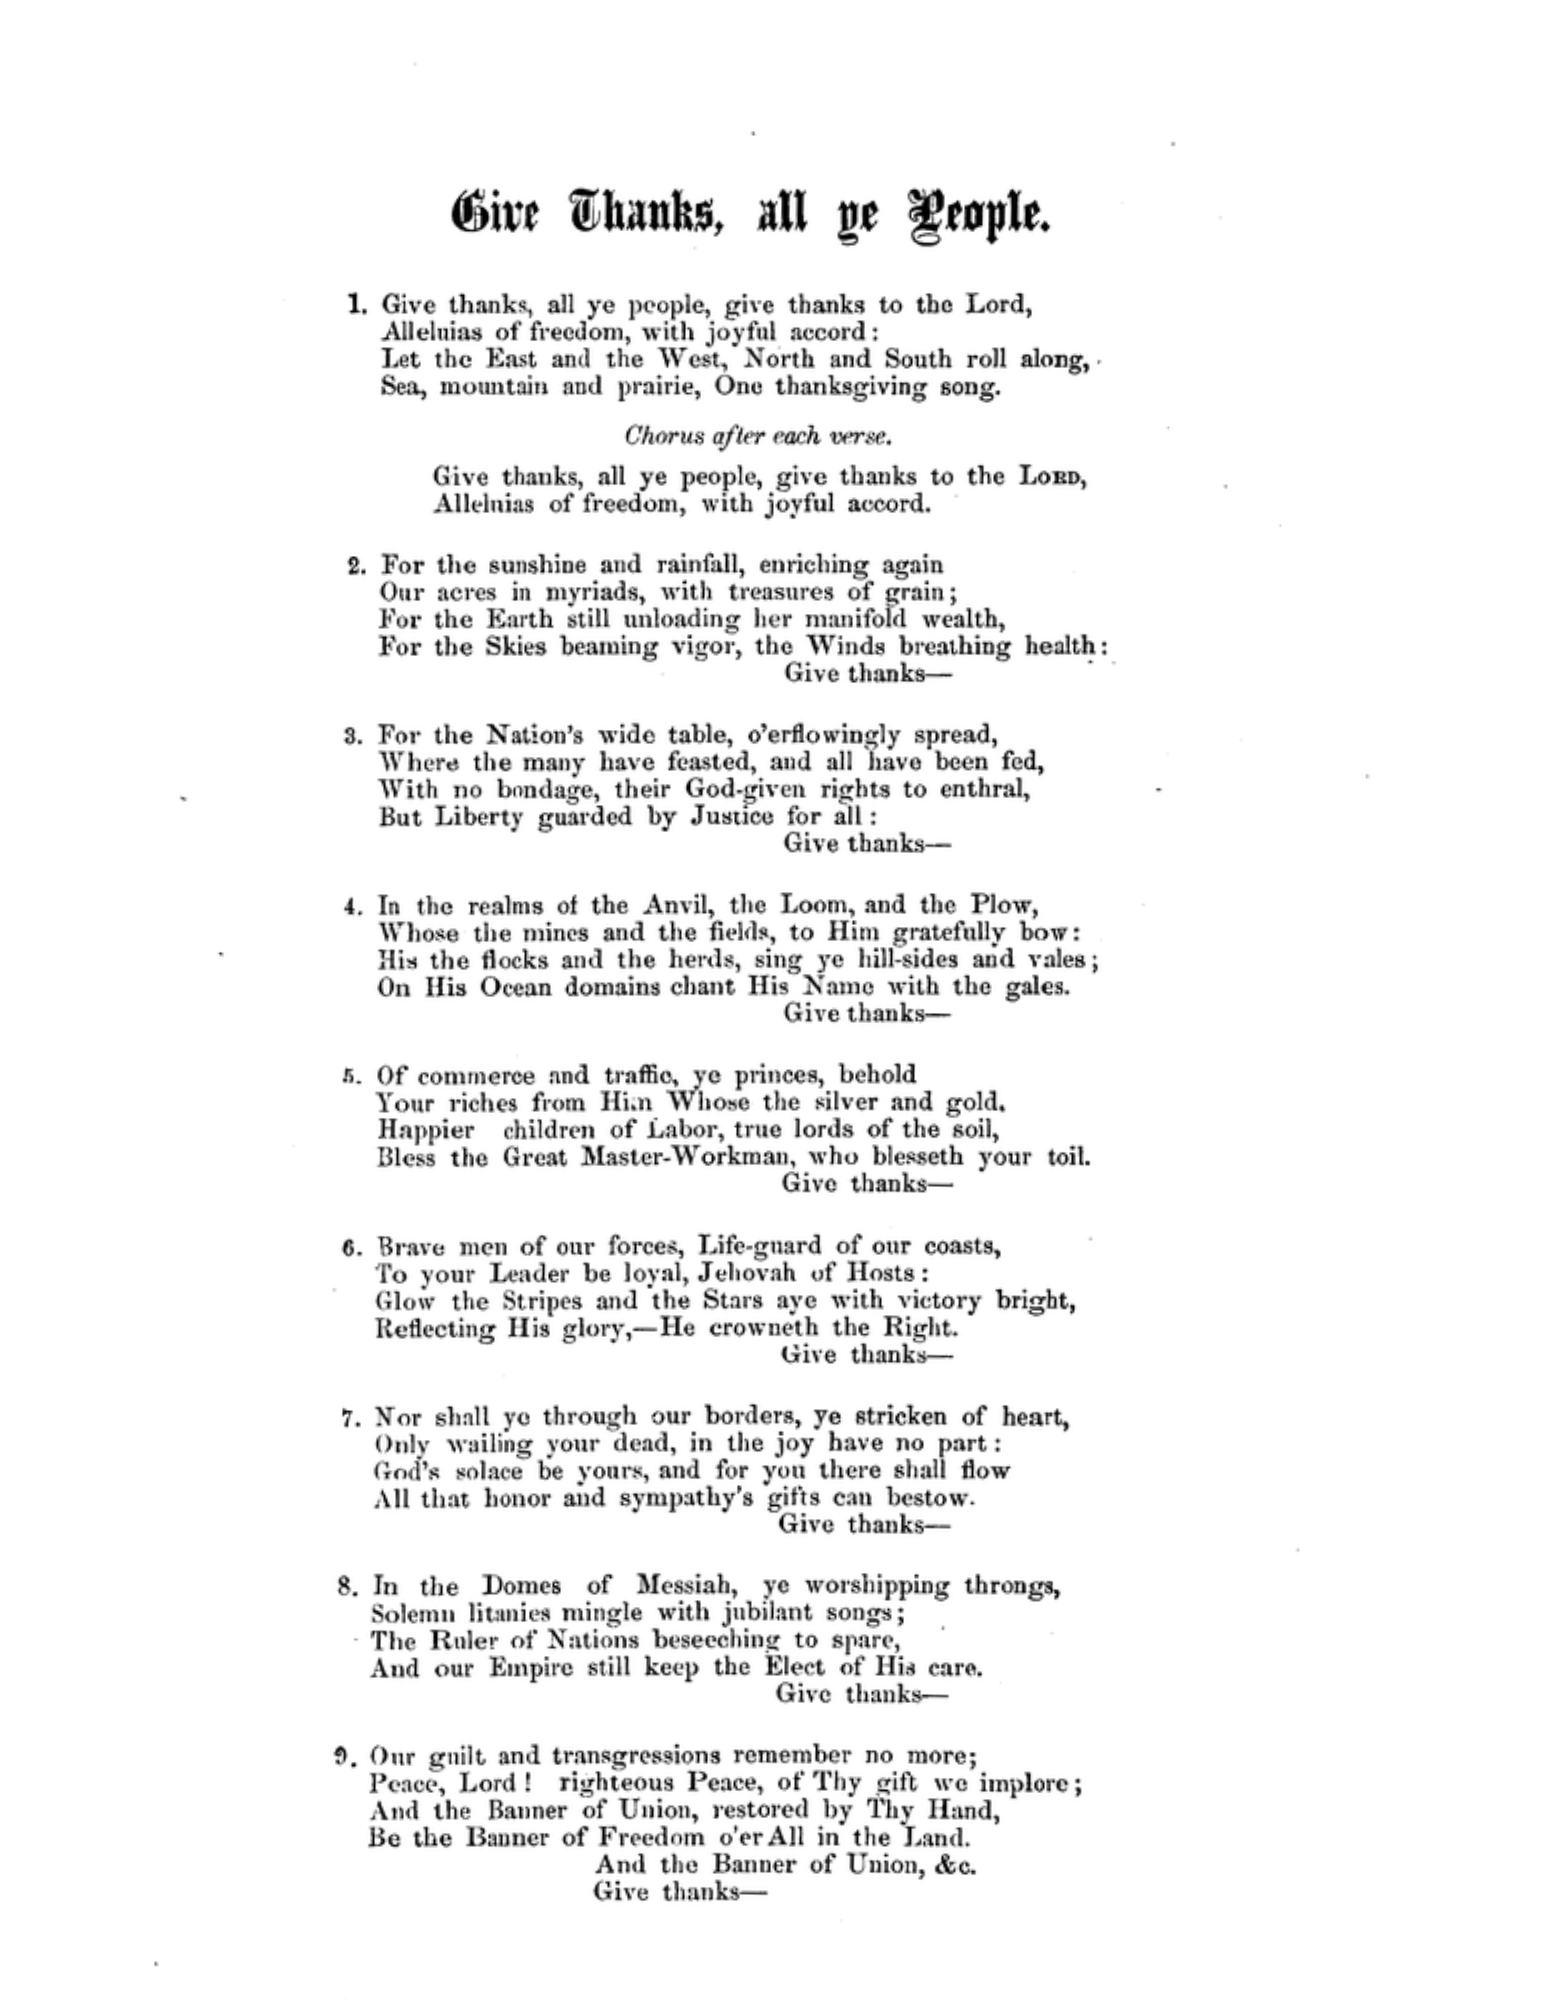 The President's Hymn Thanksgiving lyrics